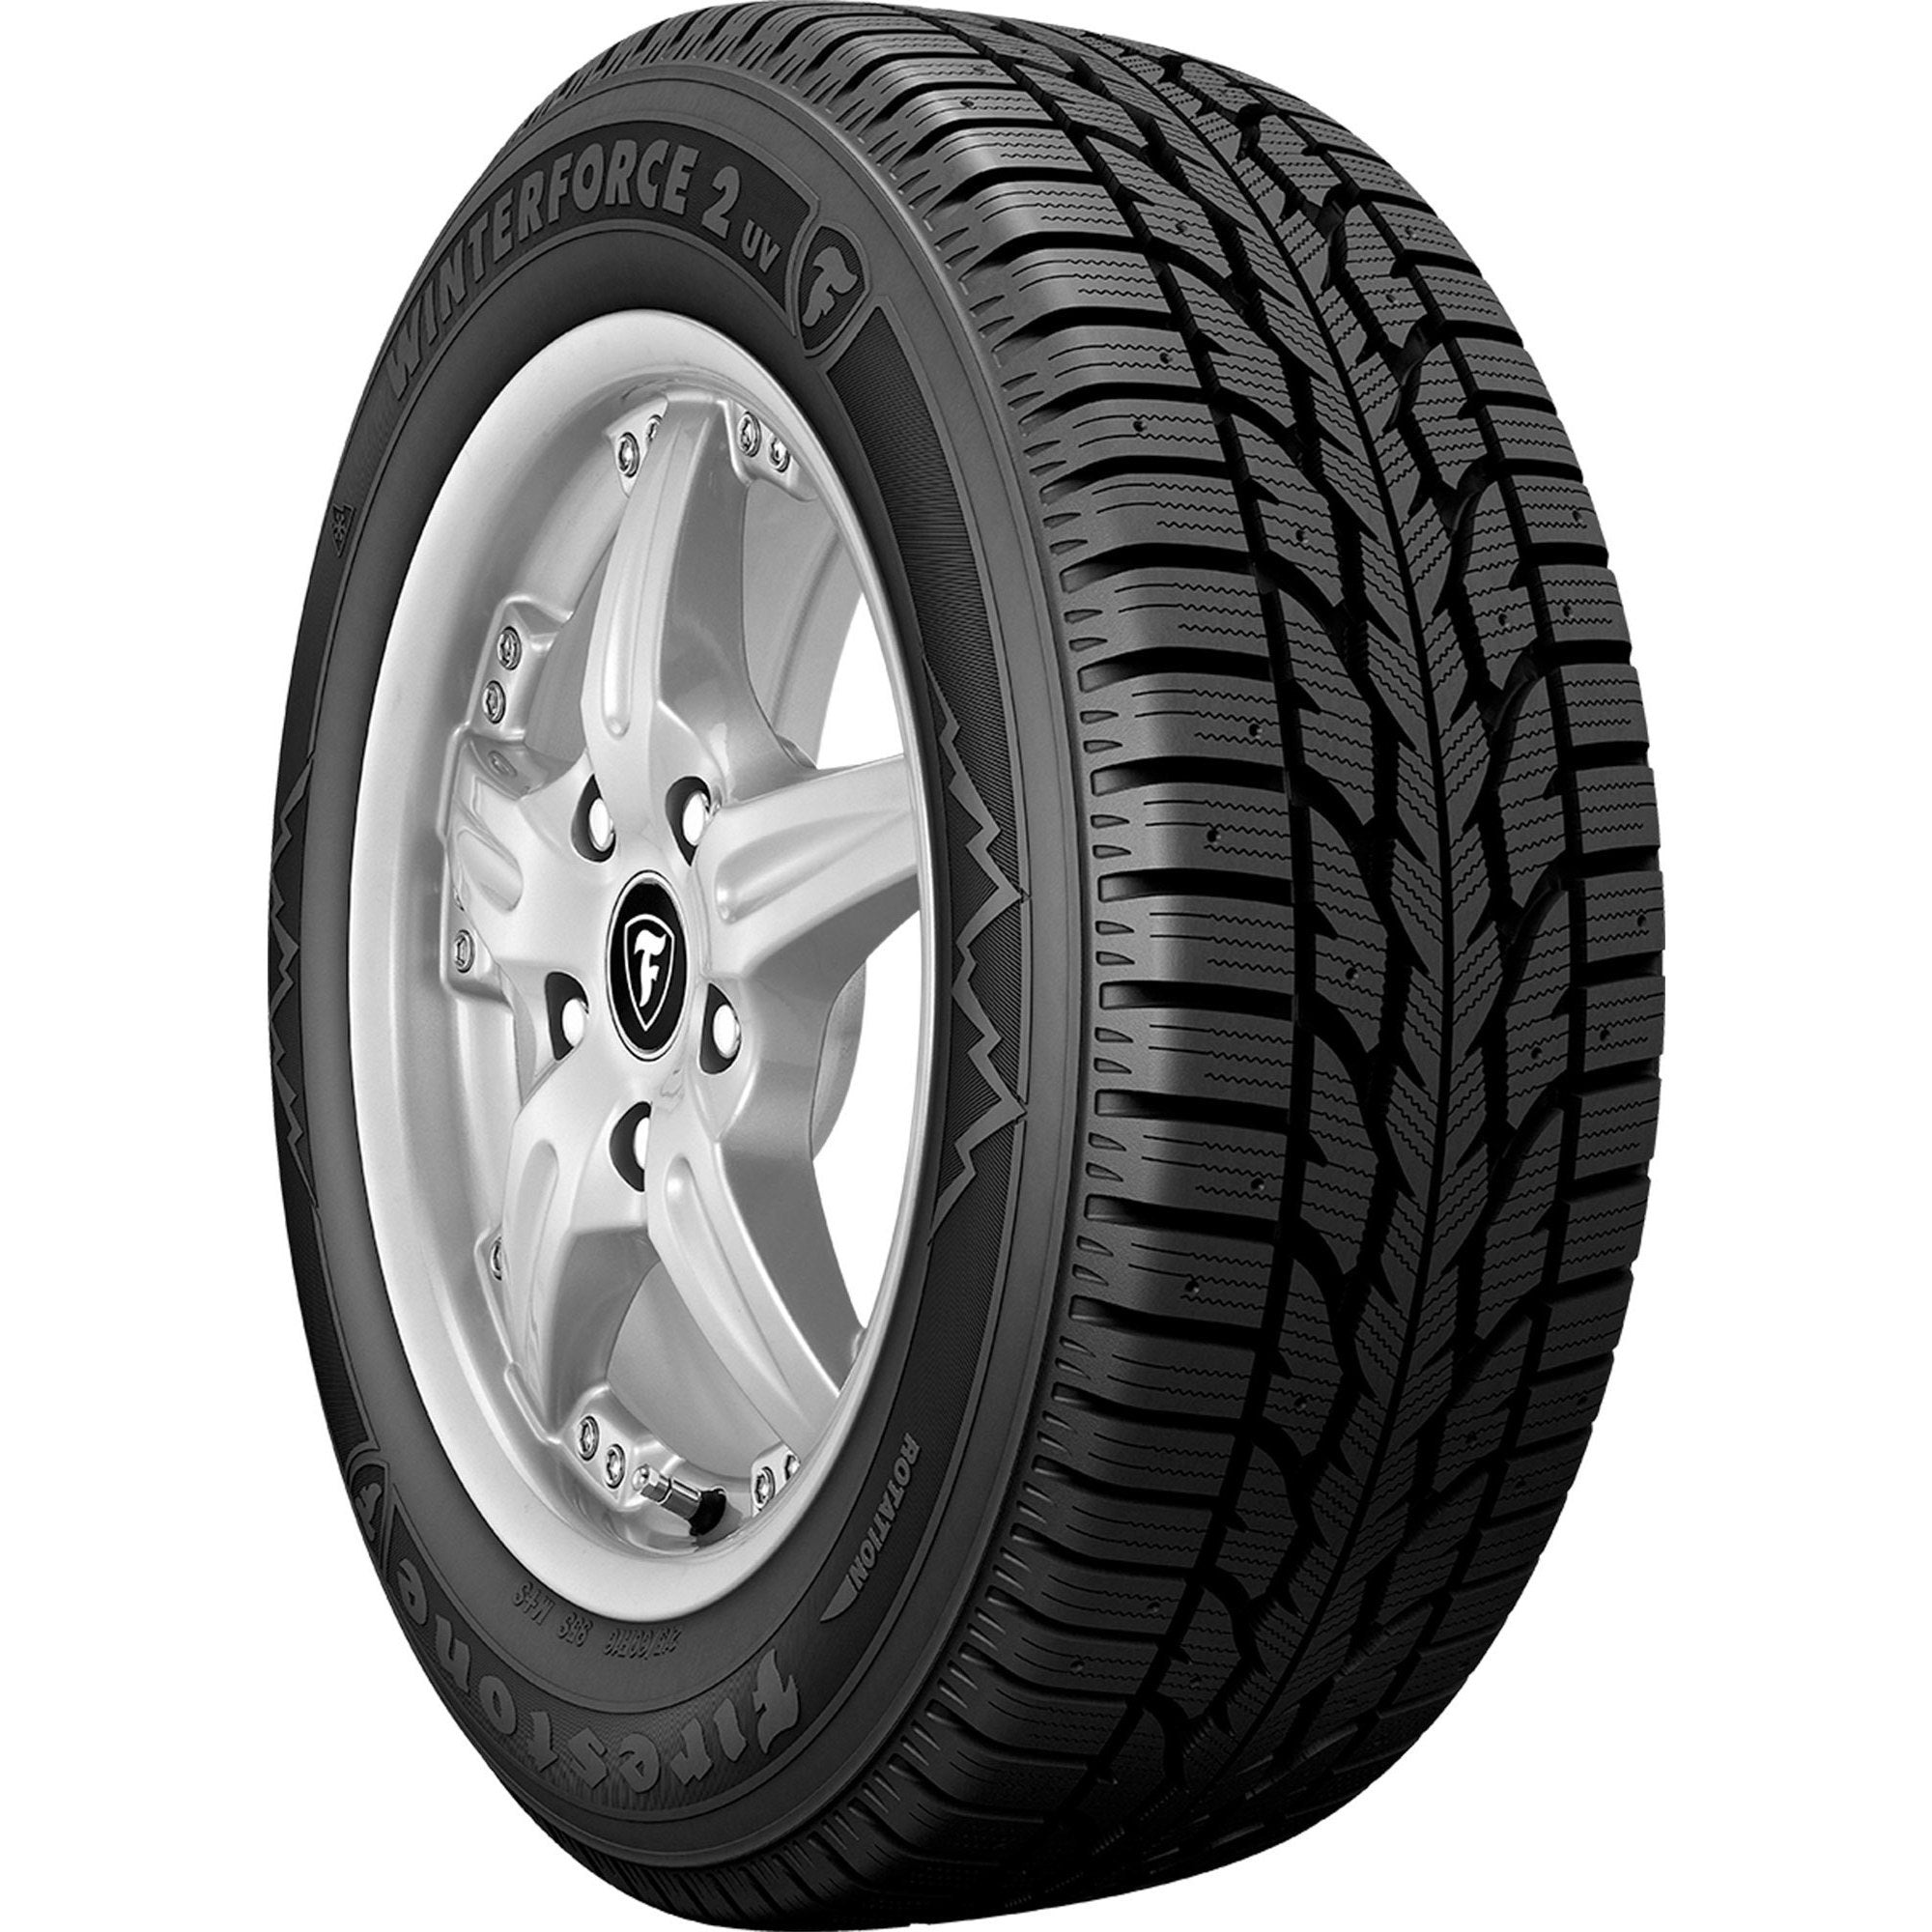 FIRESTONE WINTERFORCE2 UV 255/70R17 (31.1X10R 17) Tires